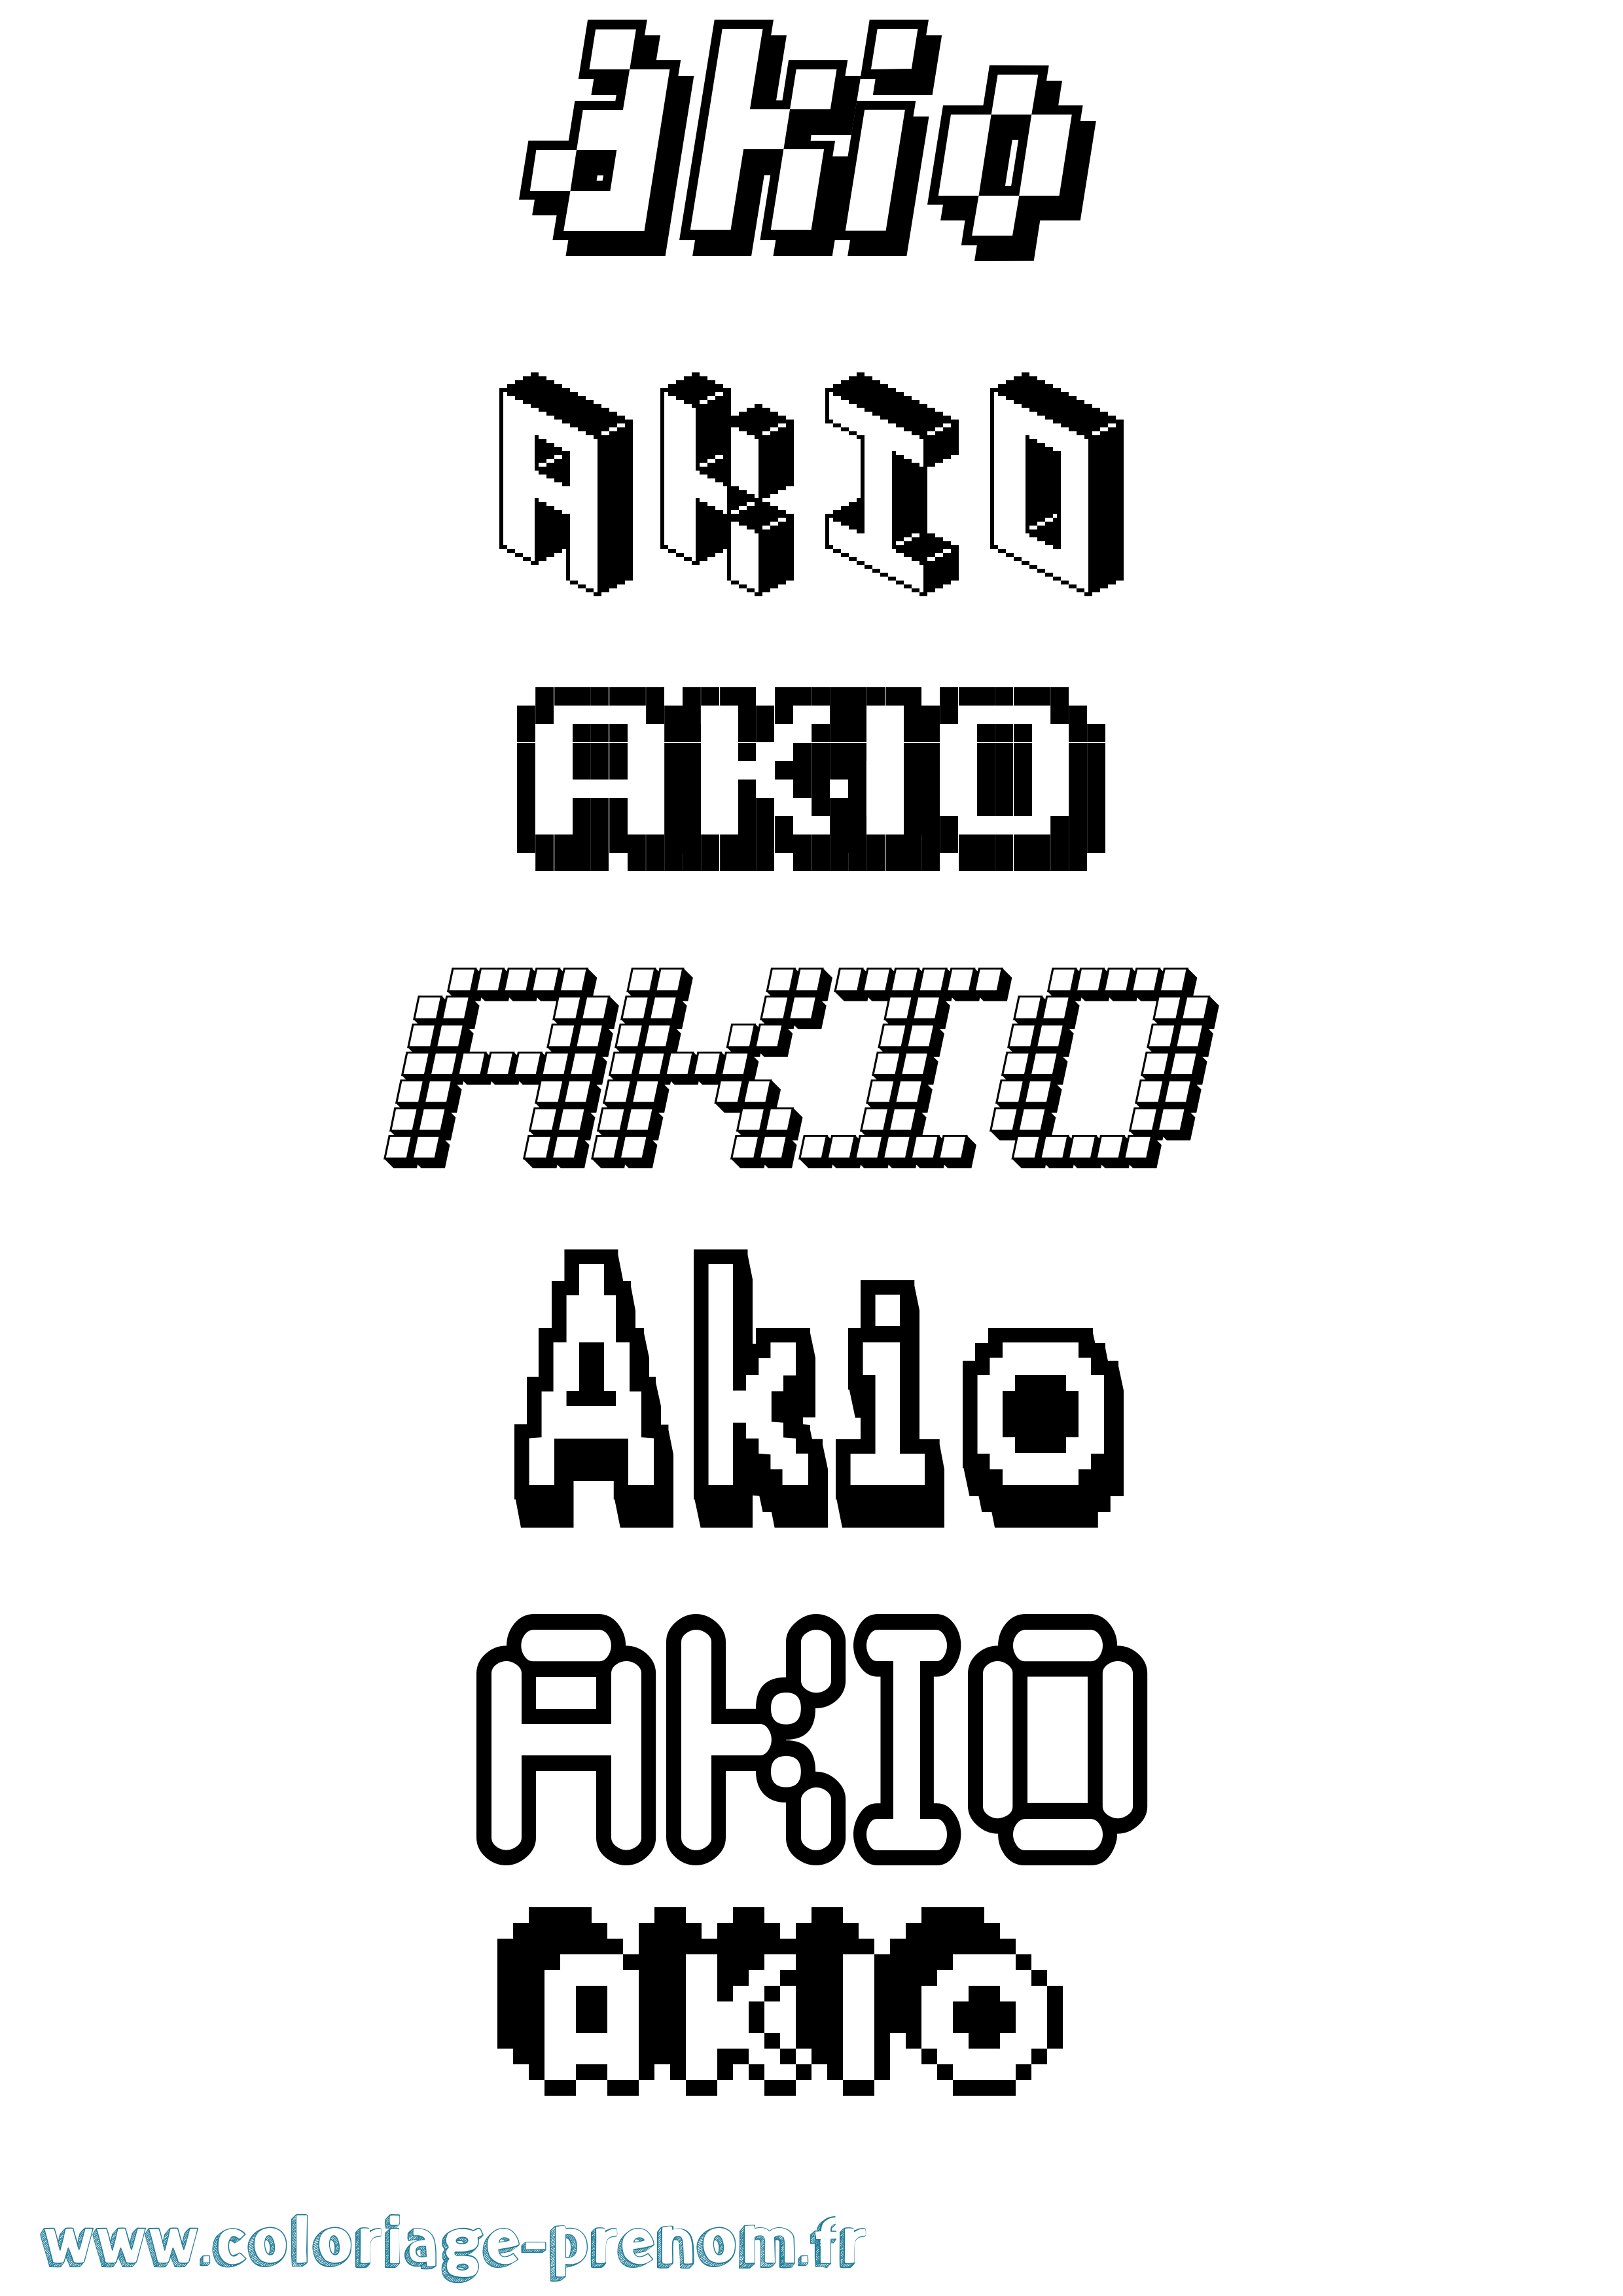 Coloriage prénom Akio Pixel